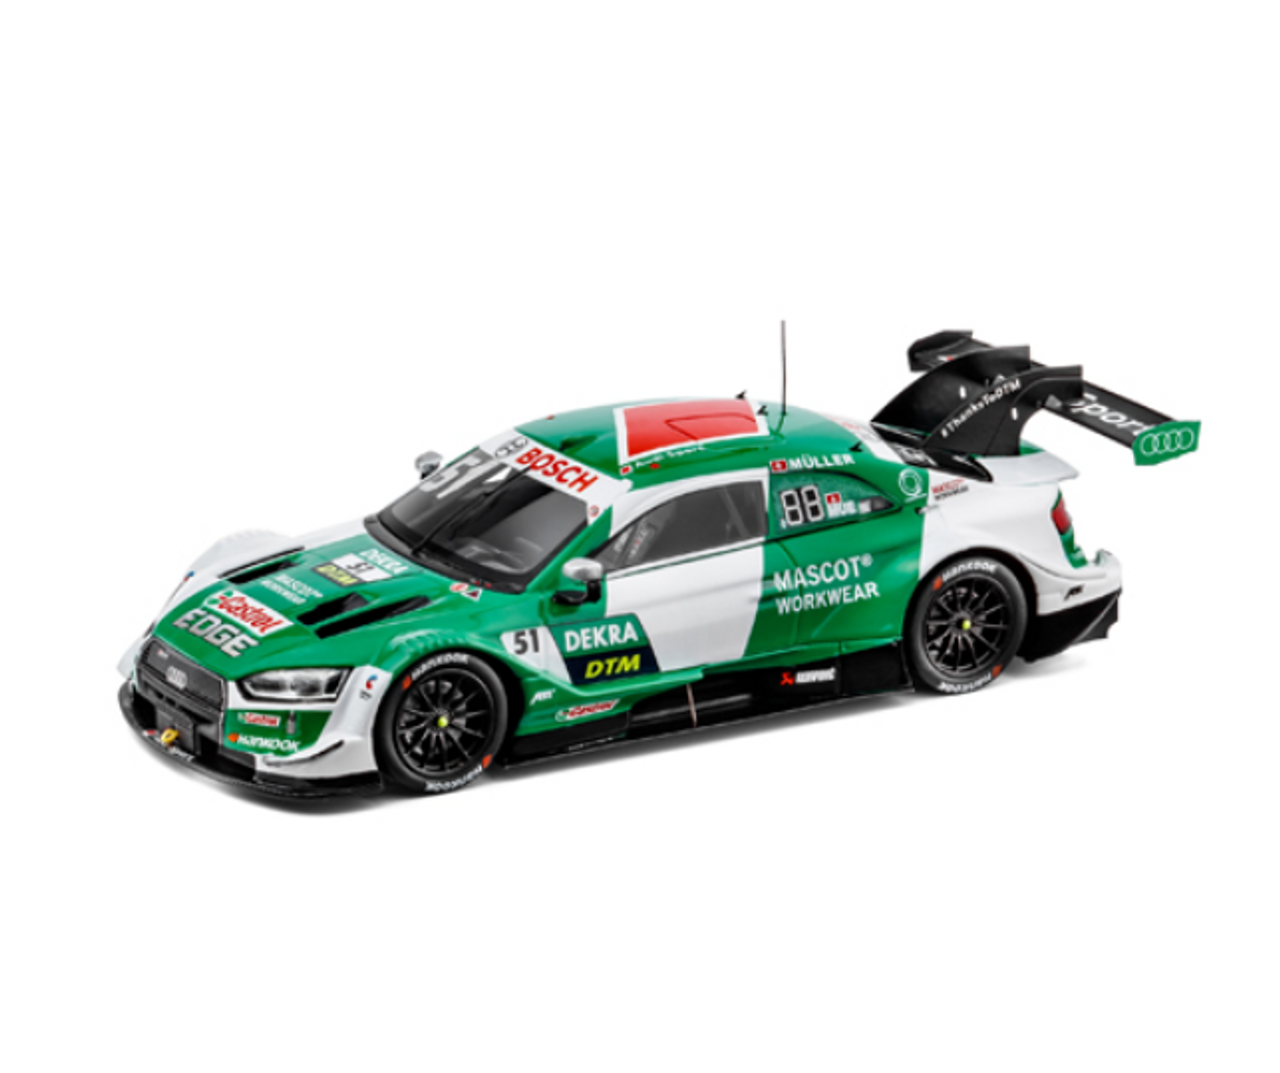 Audi RS5 DTM 2020 - Nico Muller, model car, 1:43, green, white, Audi Sport collection